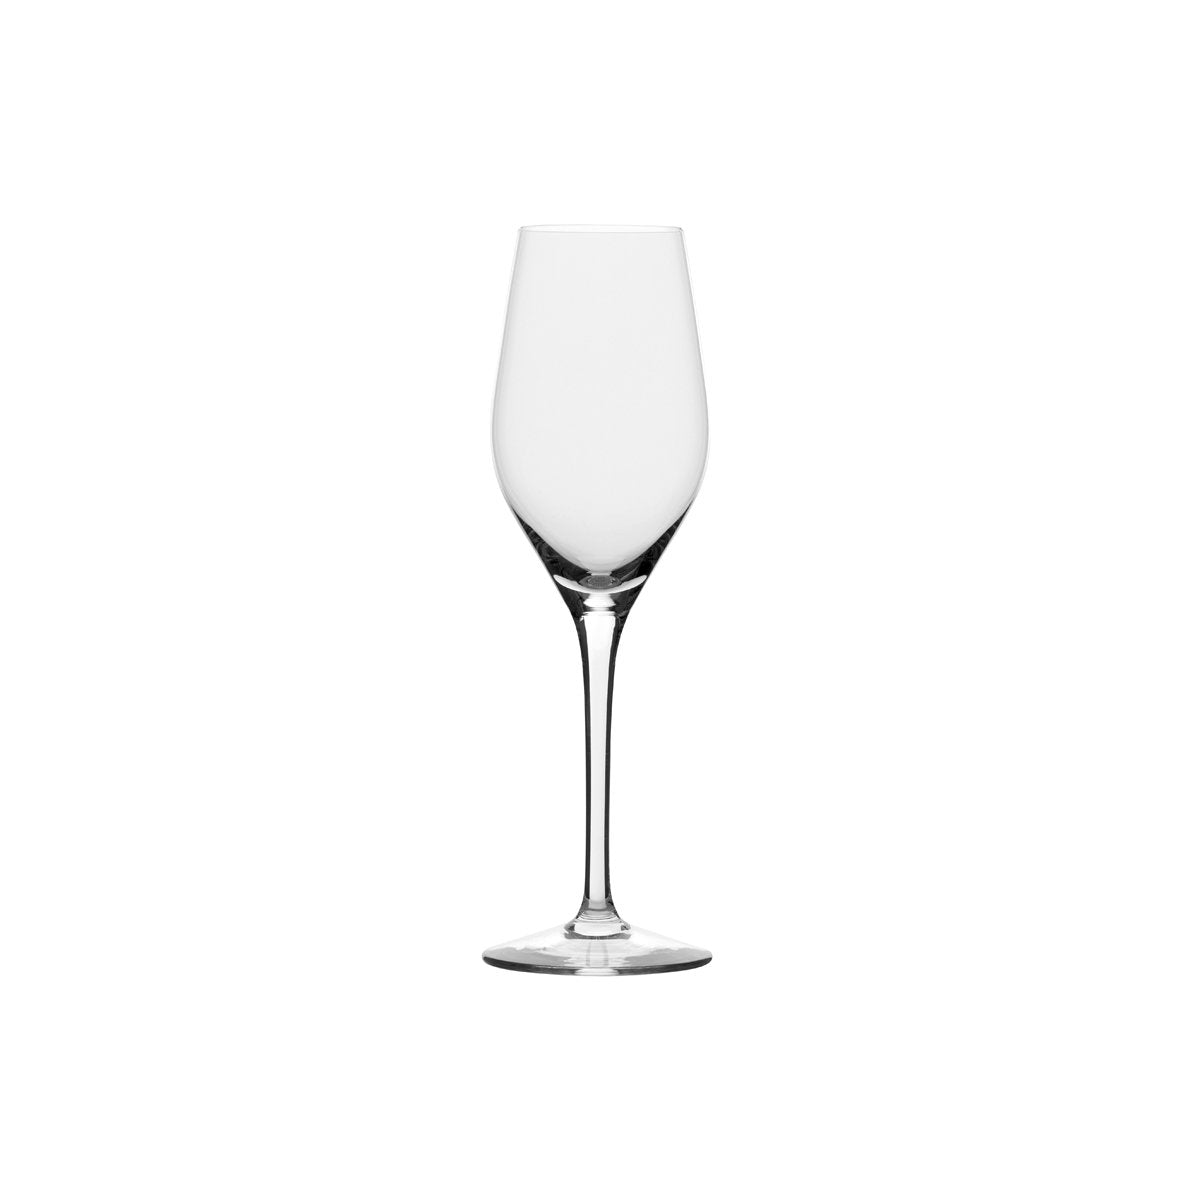 360-803 Stolzle Exquisit Champagne Flute 265ml Tomkin Australia Hospitality Supplies